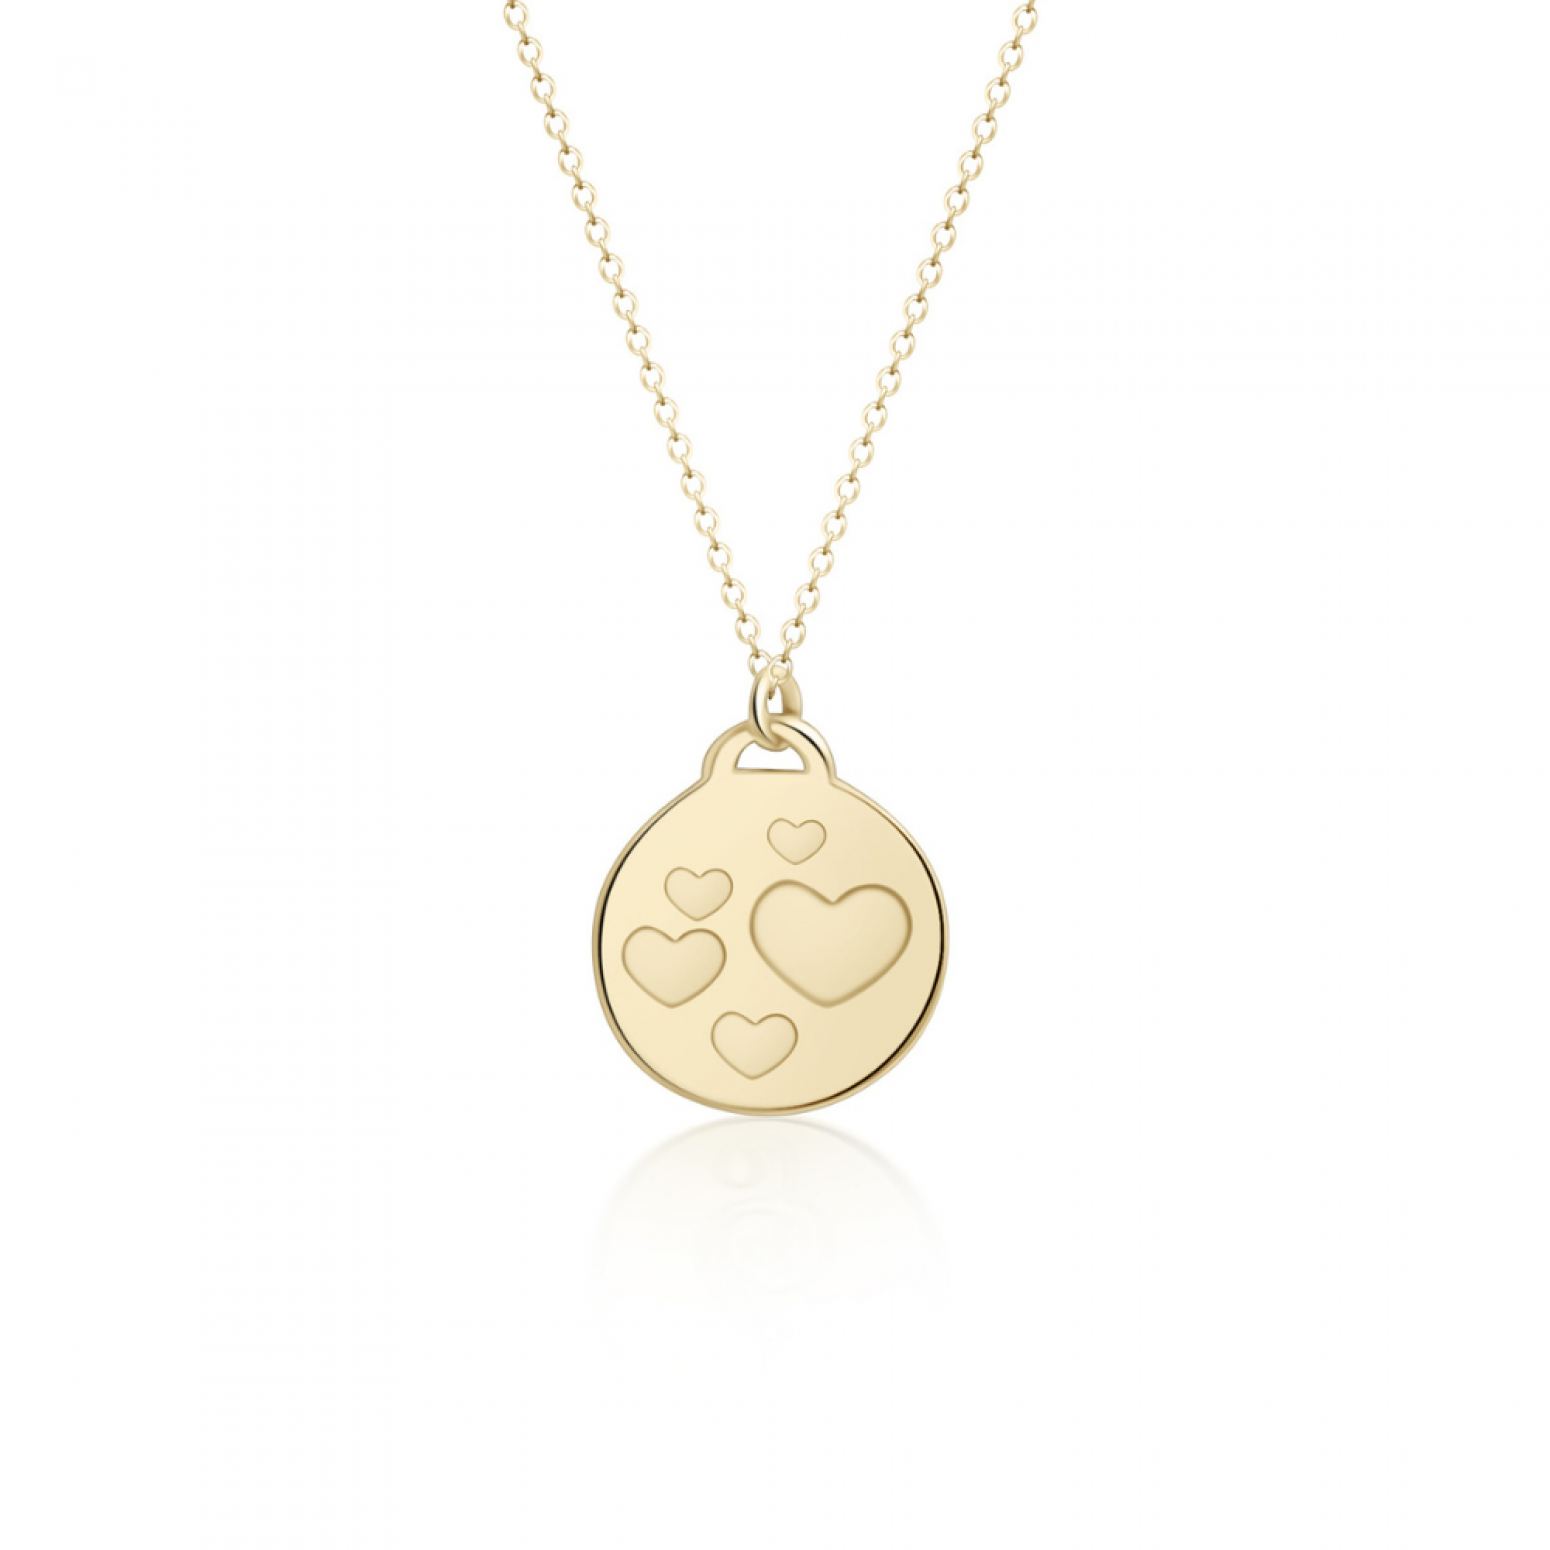 Round necklace, Κ14 gold with hearts, ko4981 NECKLACES Κοσμηματα - chrilia.gr